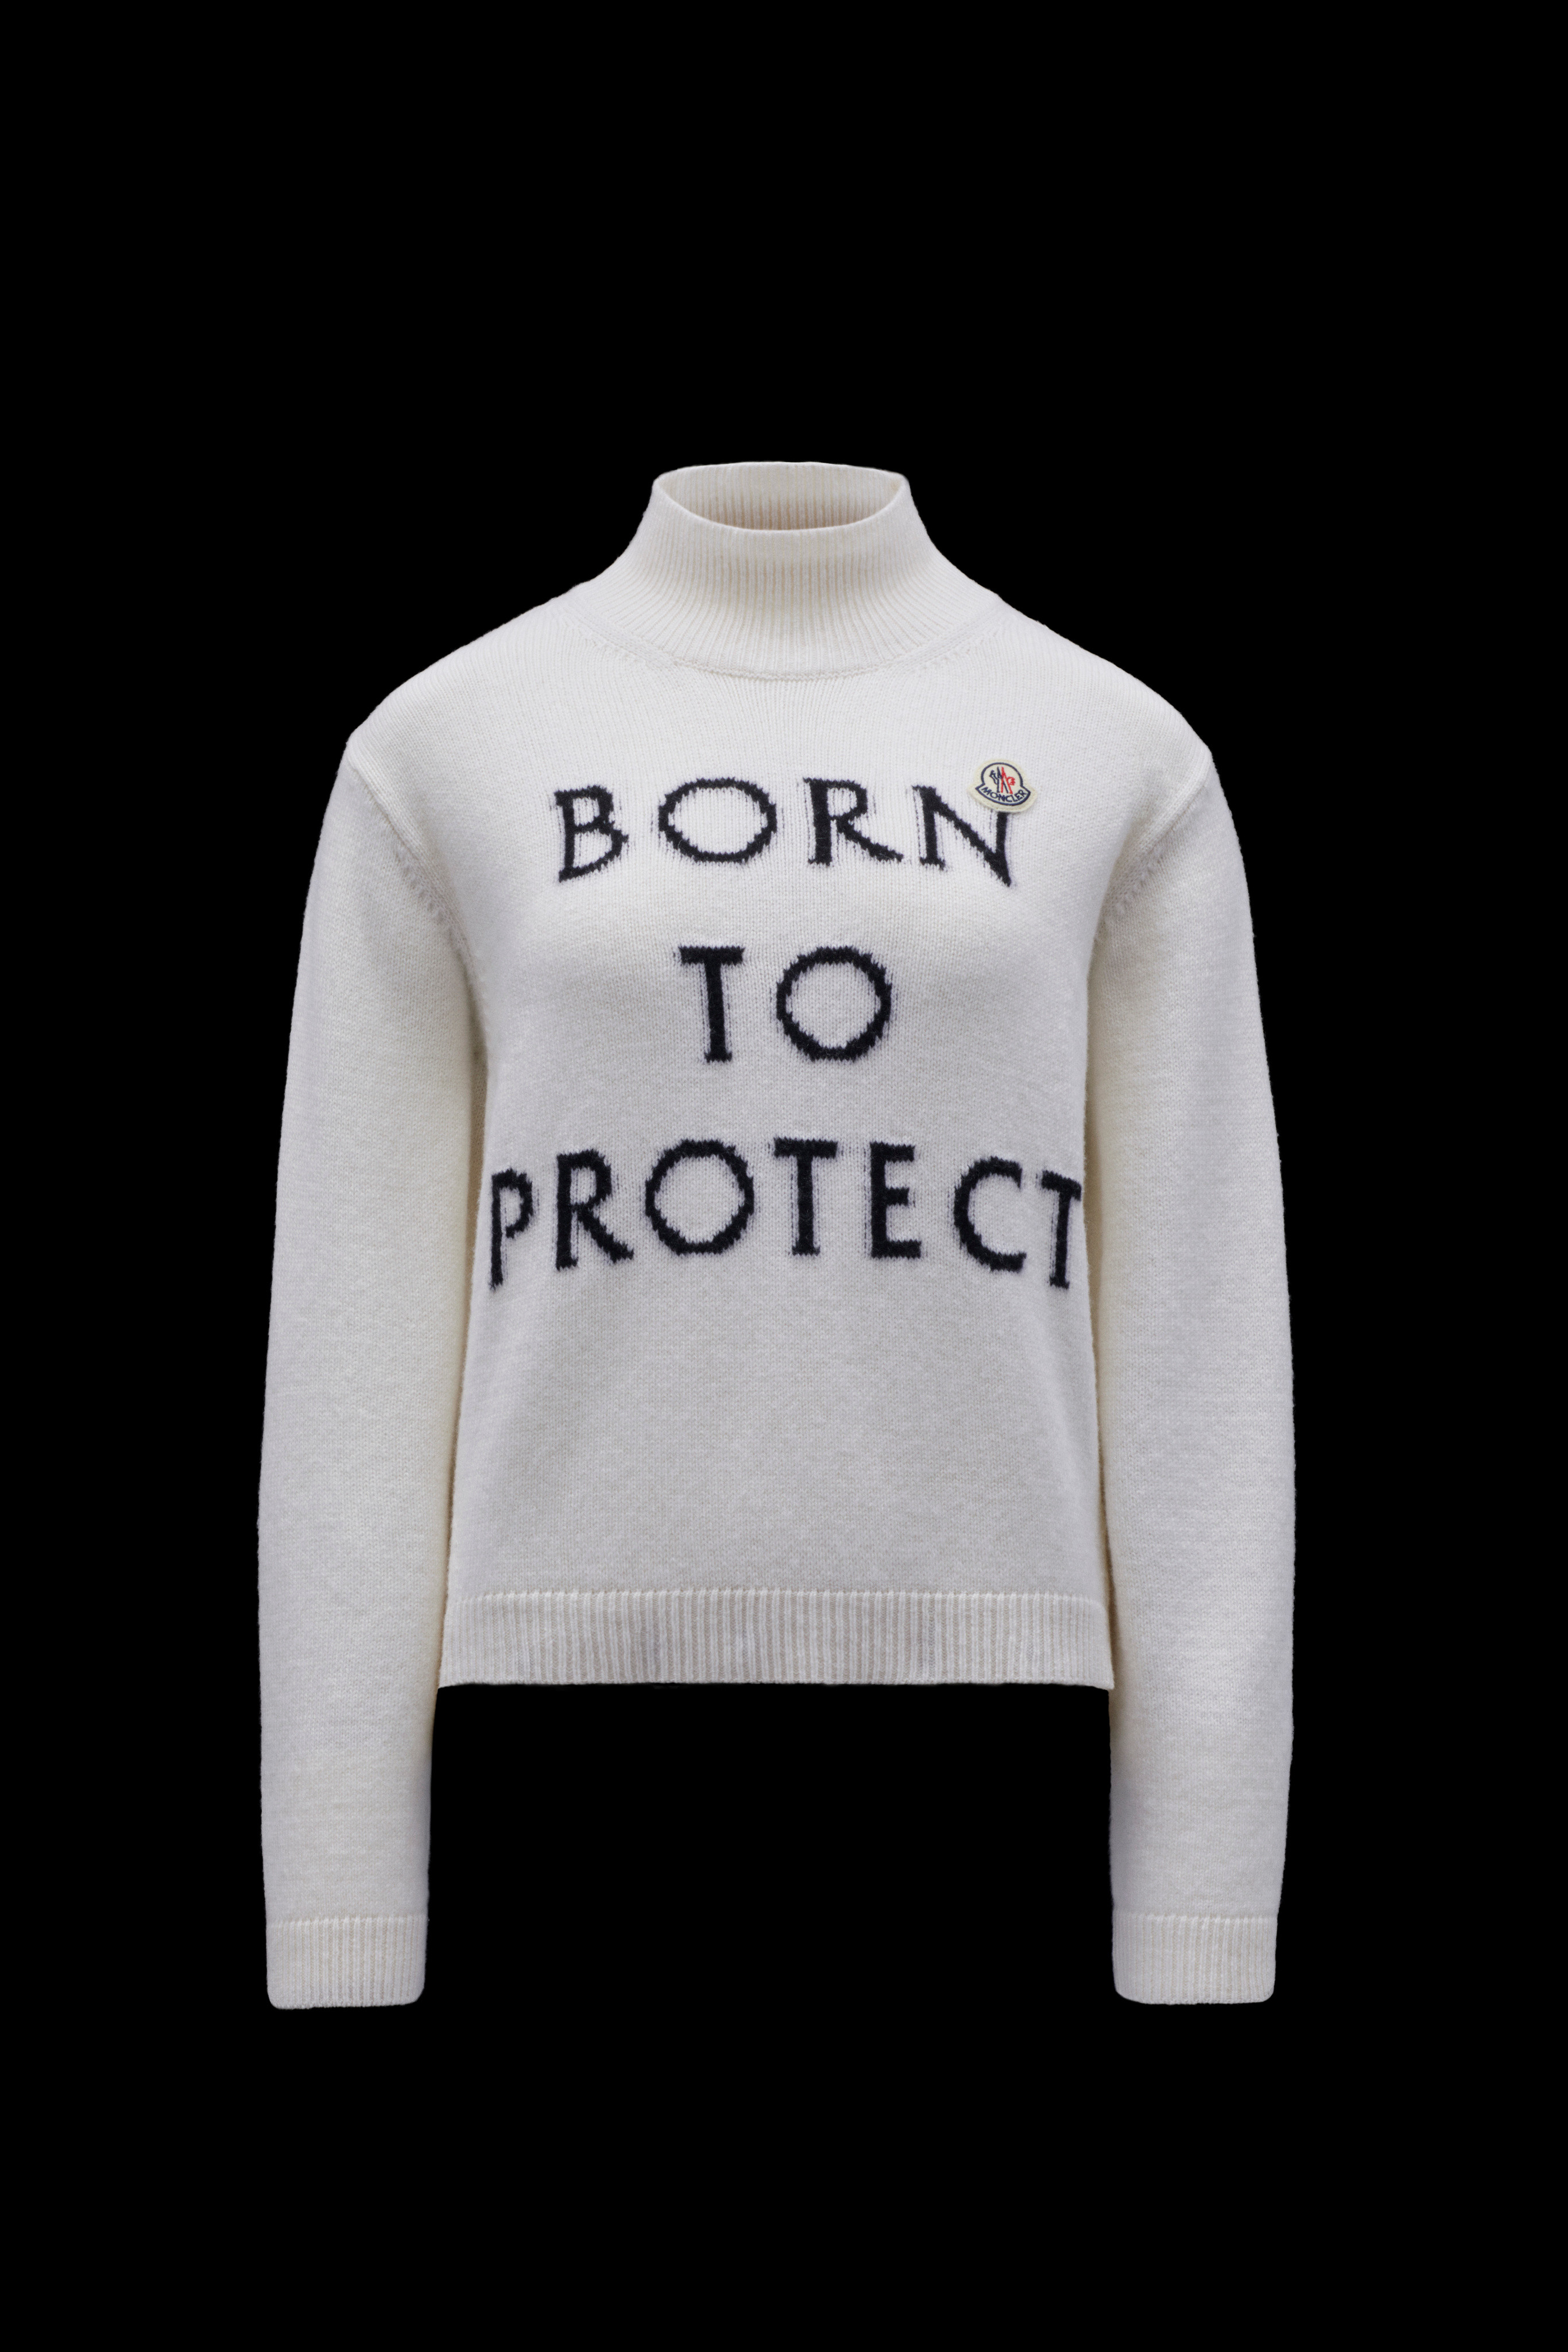 Moncler - Born To Protect | Moncler